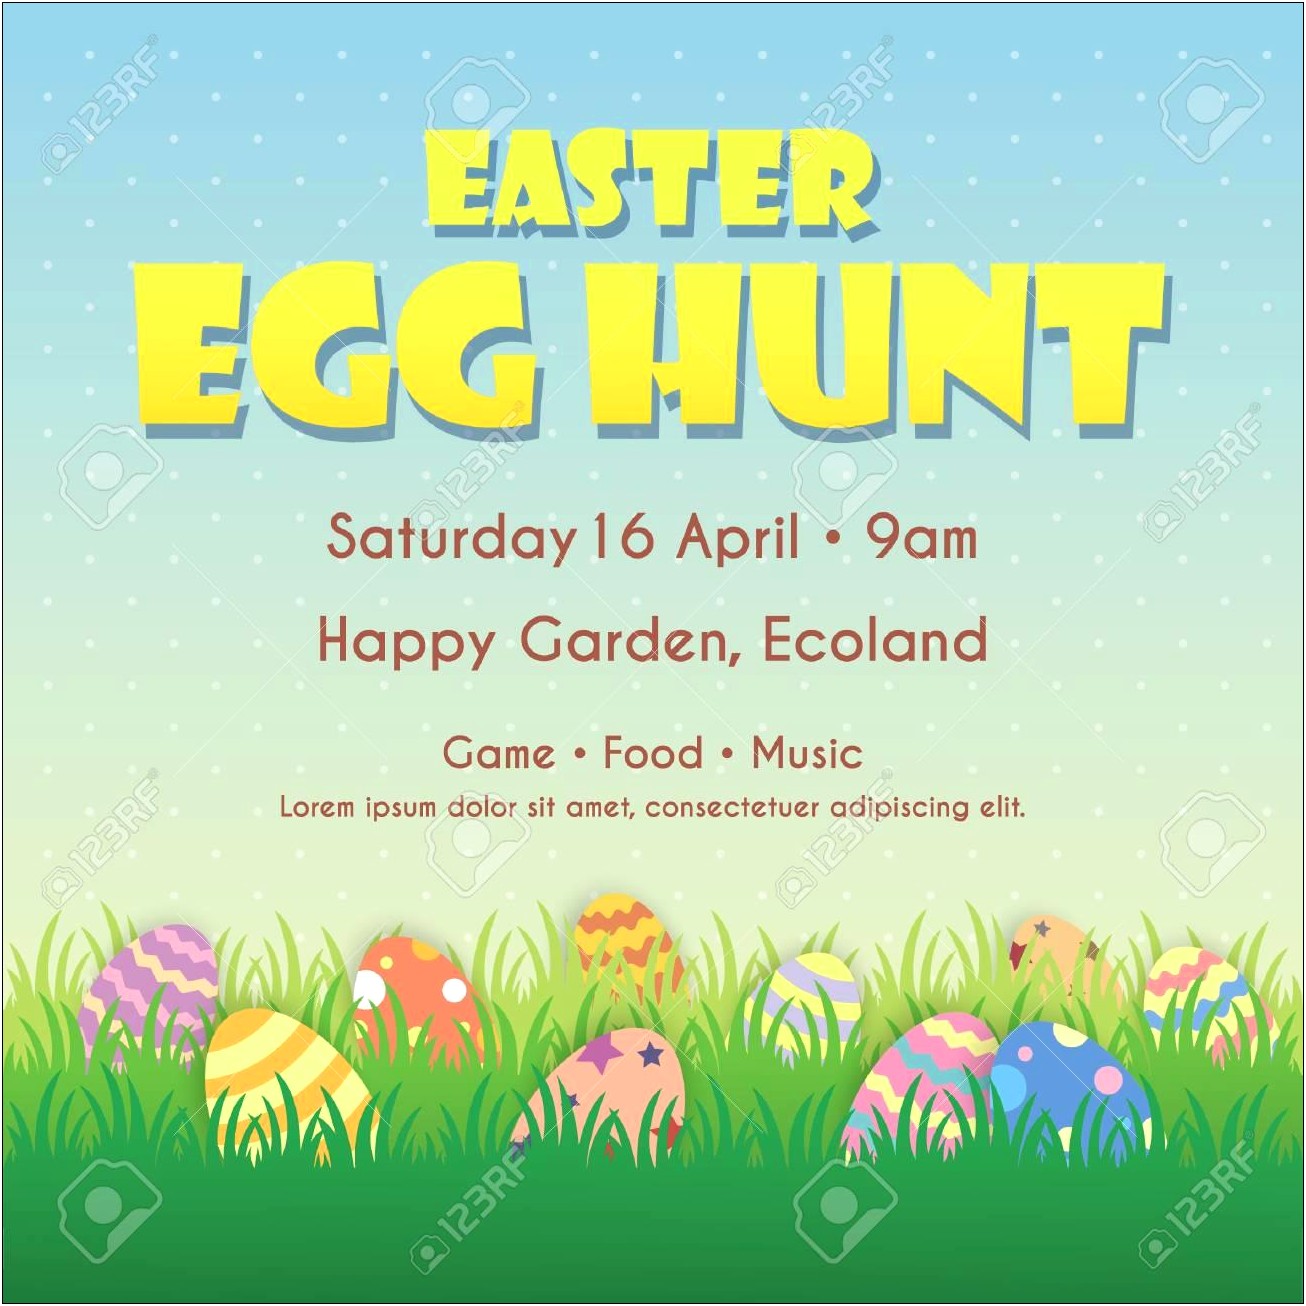 Easter Egg Hunt Poster Free Template